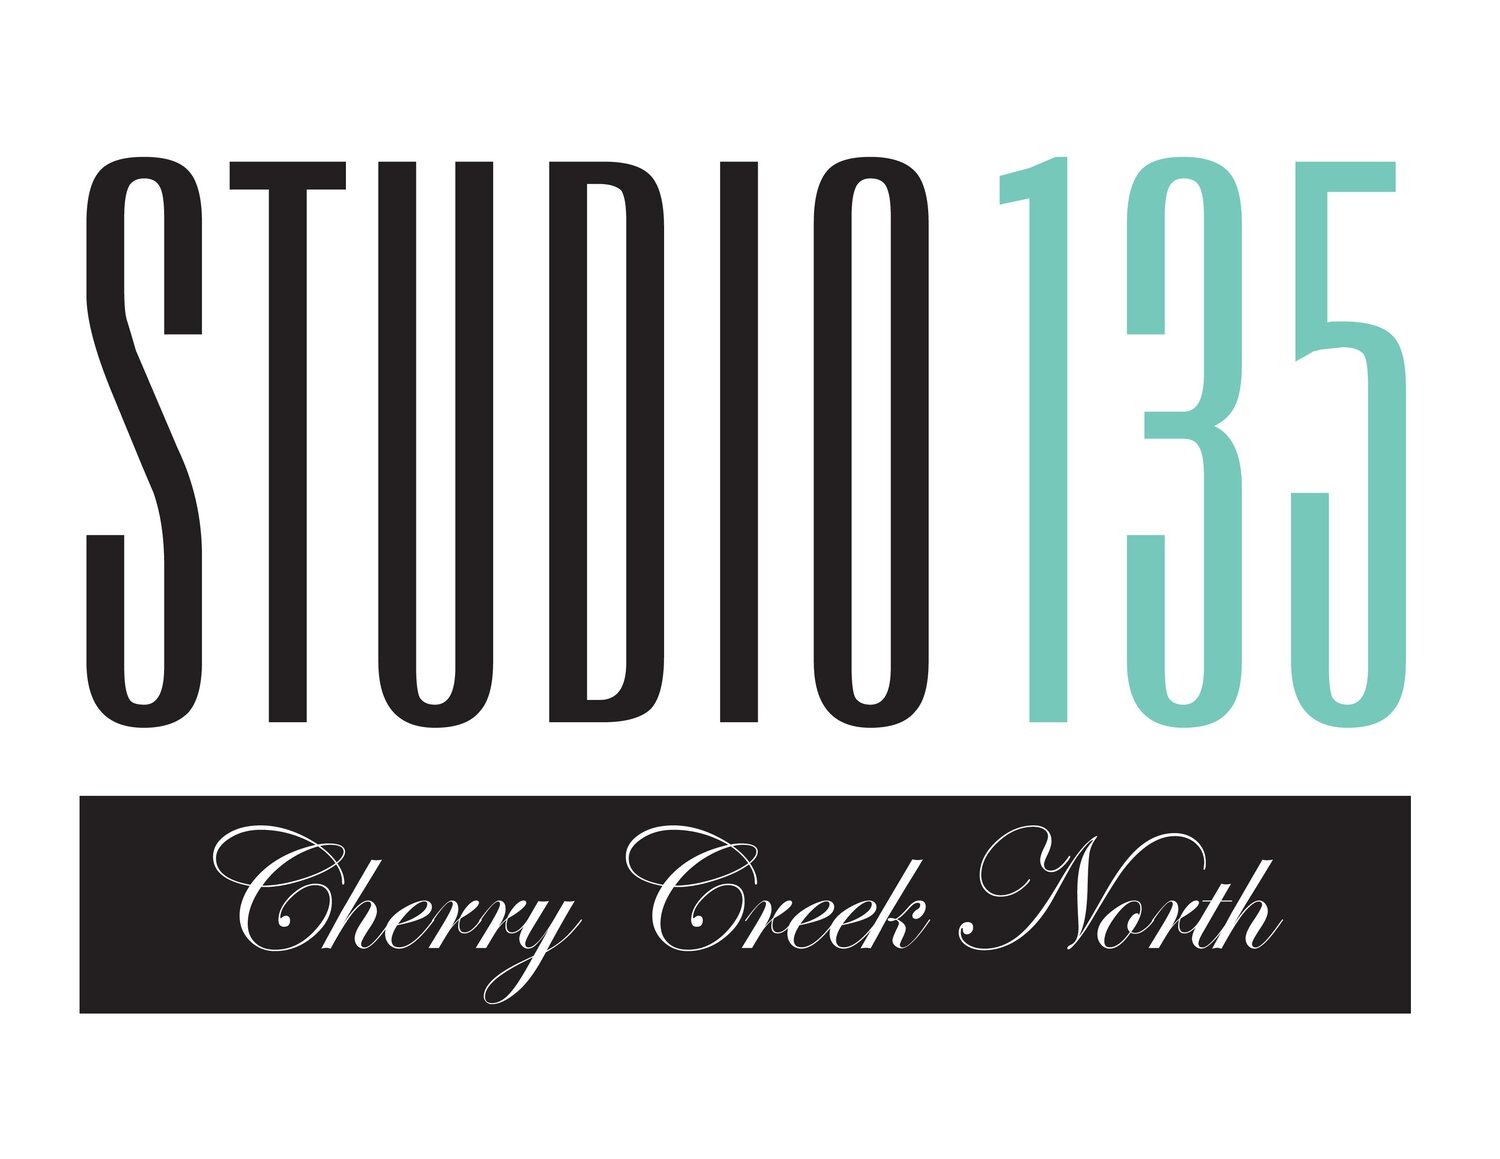 Studio 135 Apartments in Cherry Creek North